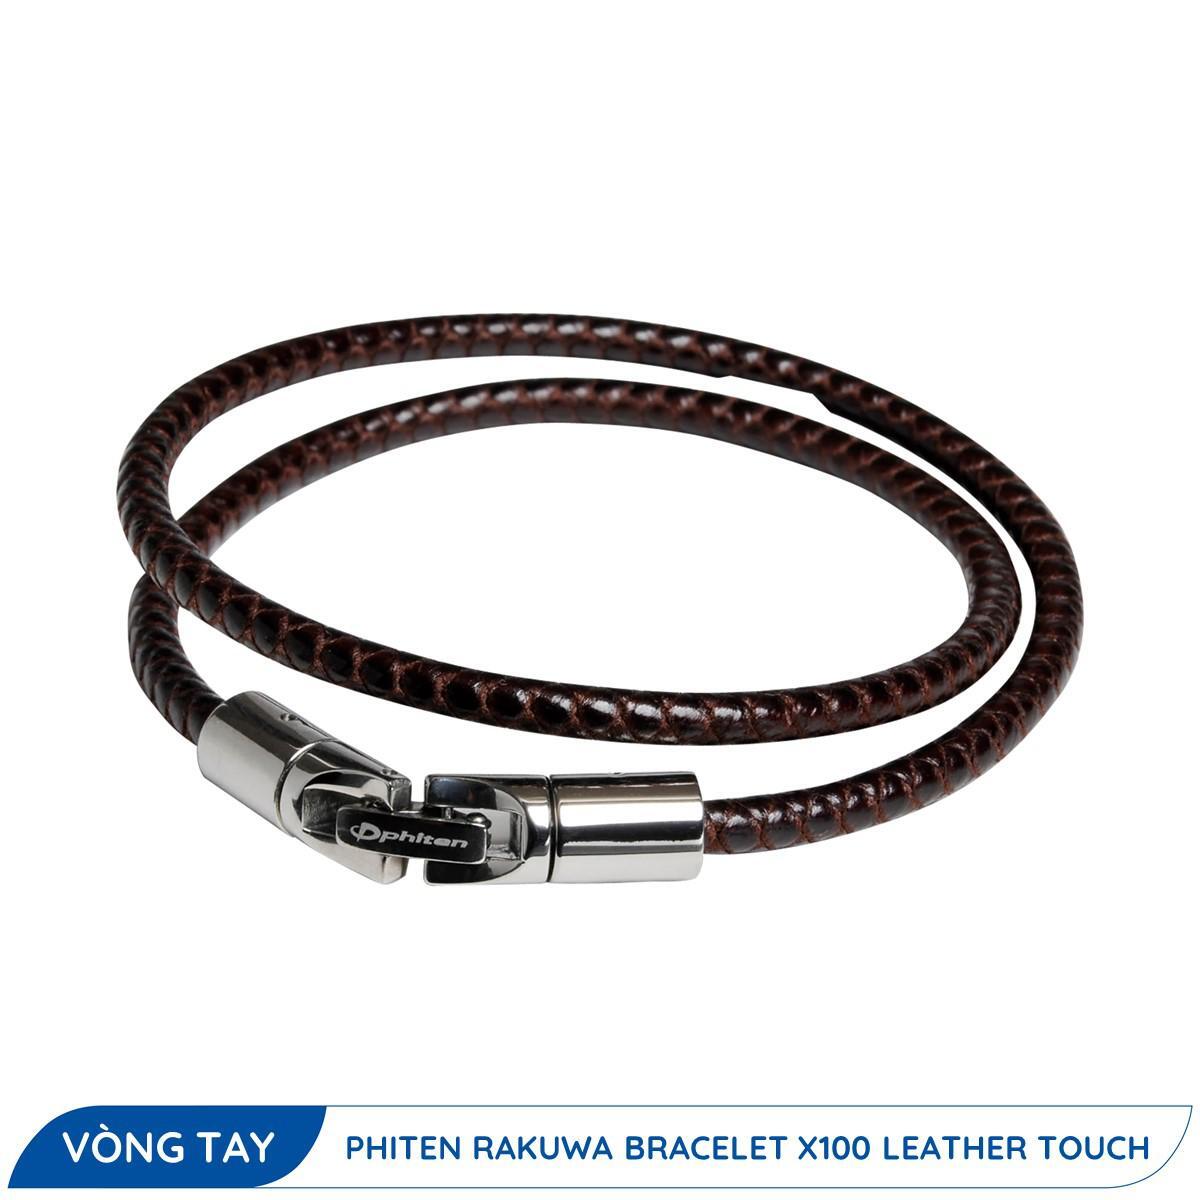 Vòng tay phiten rakuwa bracelet x100 leather touch mens TG415001 / TG415101